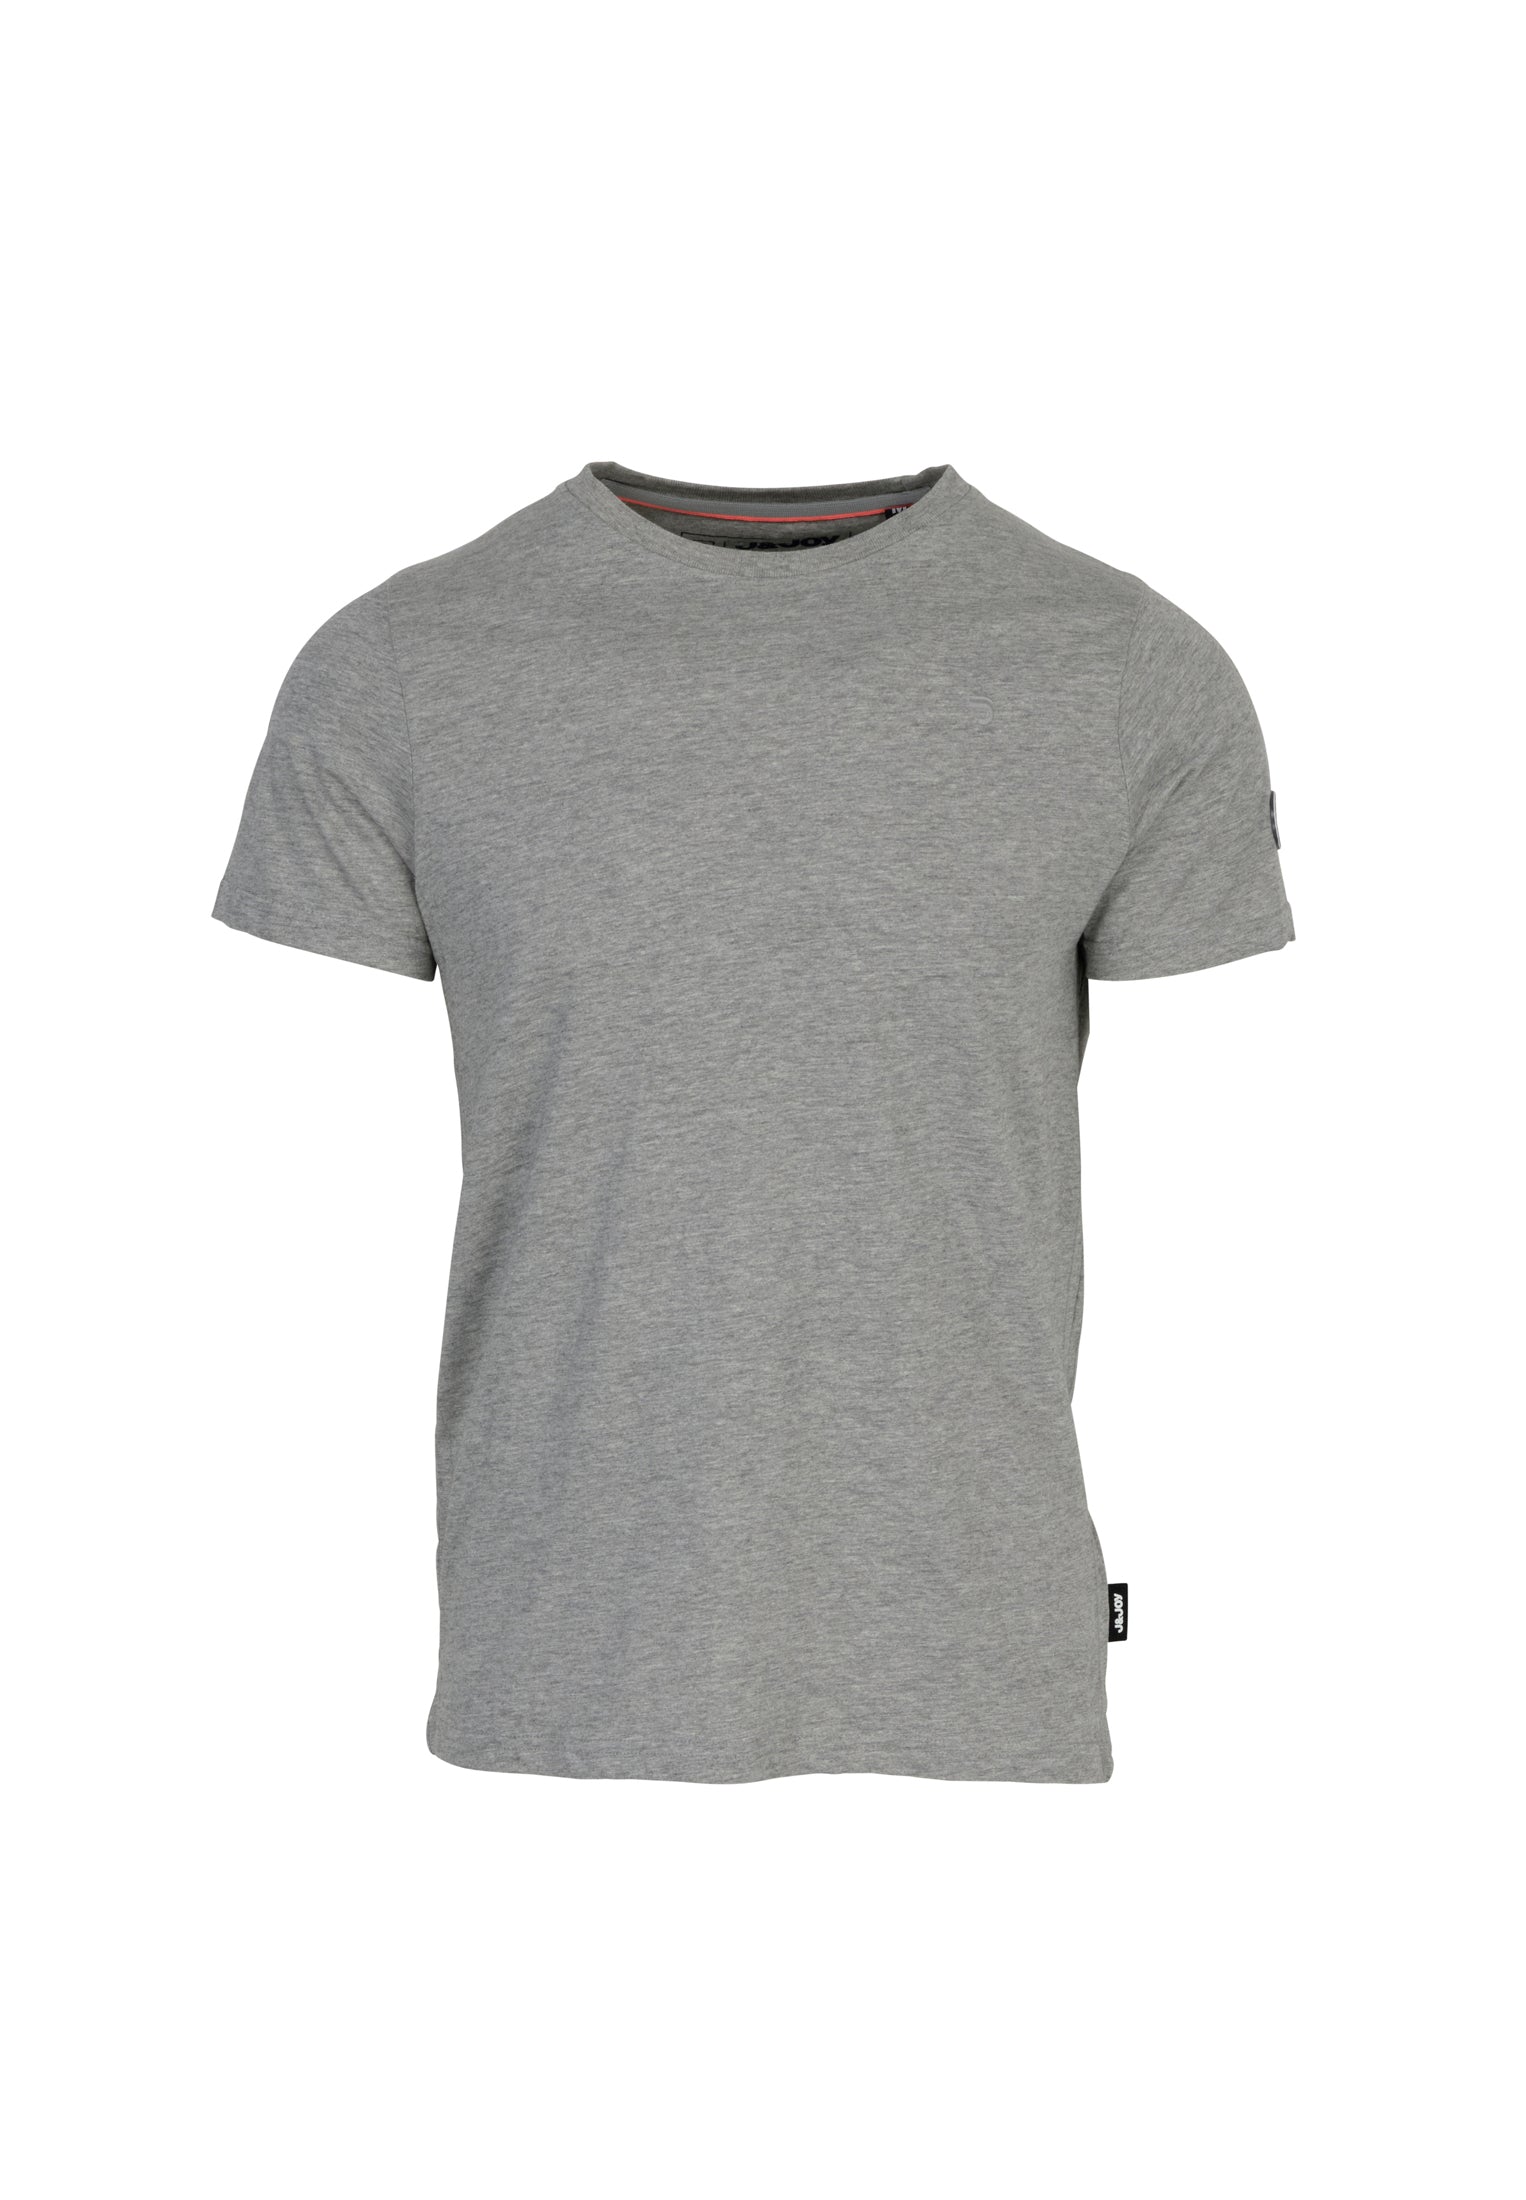 T-Shirt Homme Essentials 05 Light Grey | J&JOY.